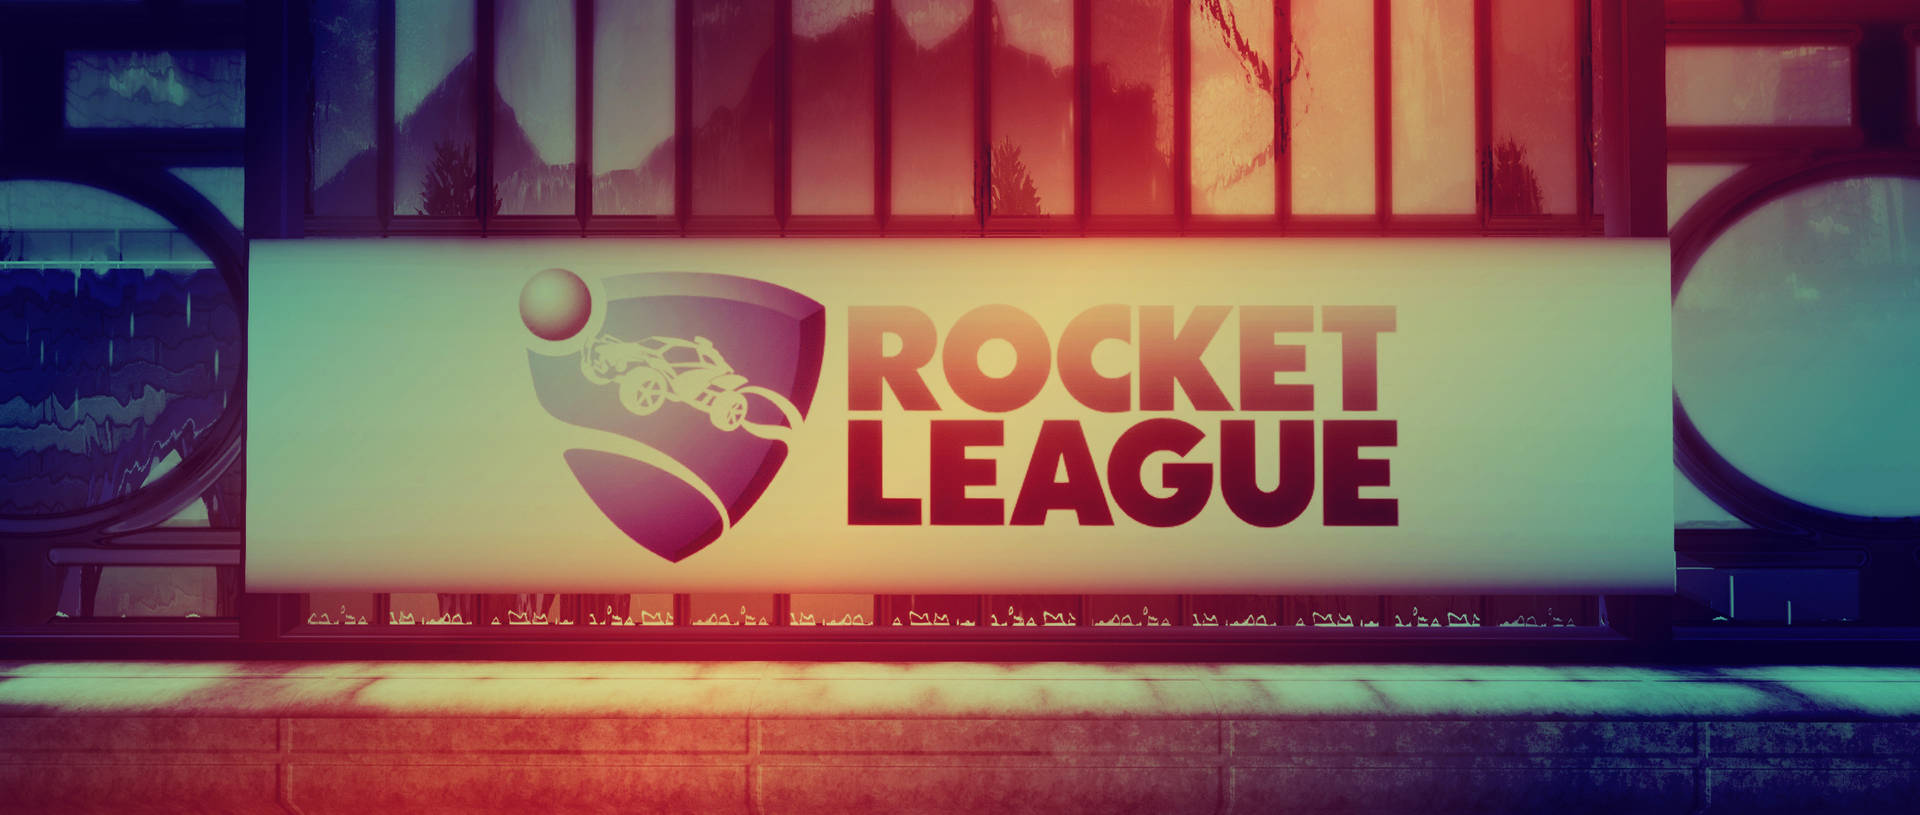 Cool Rocket League Logo Background